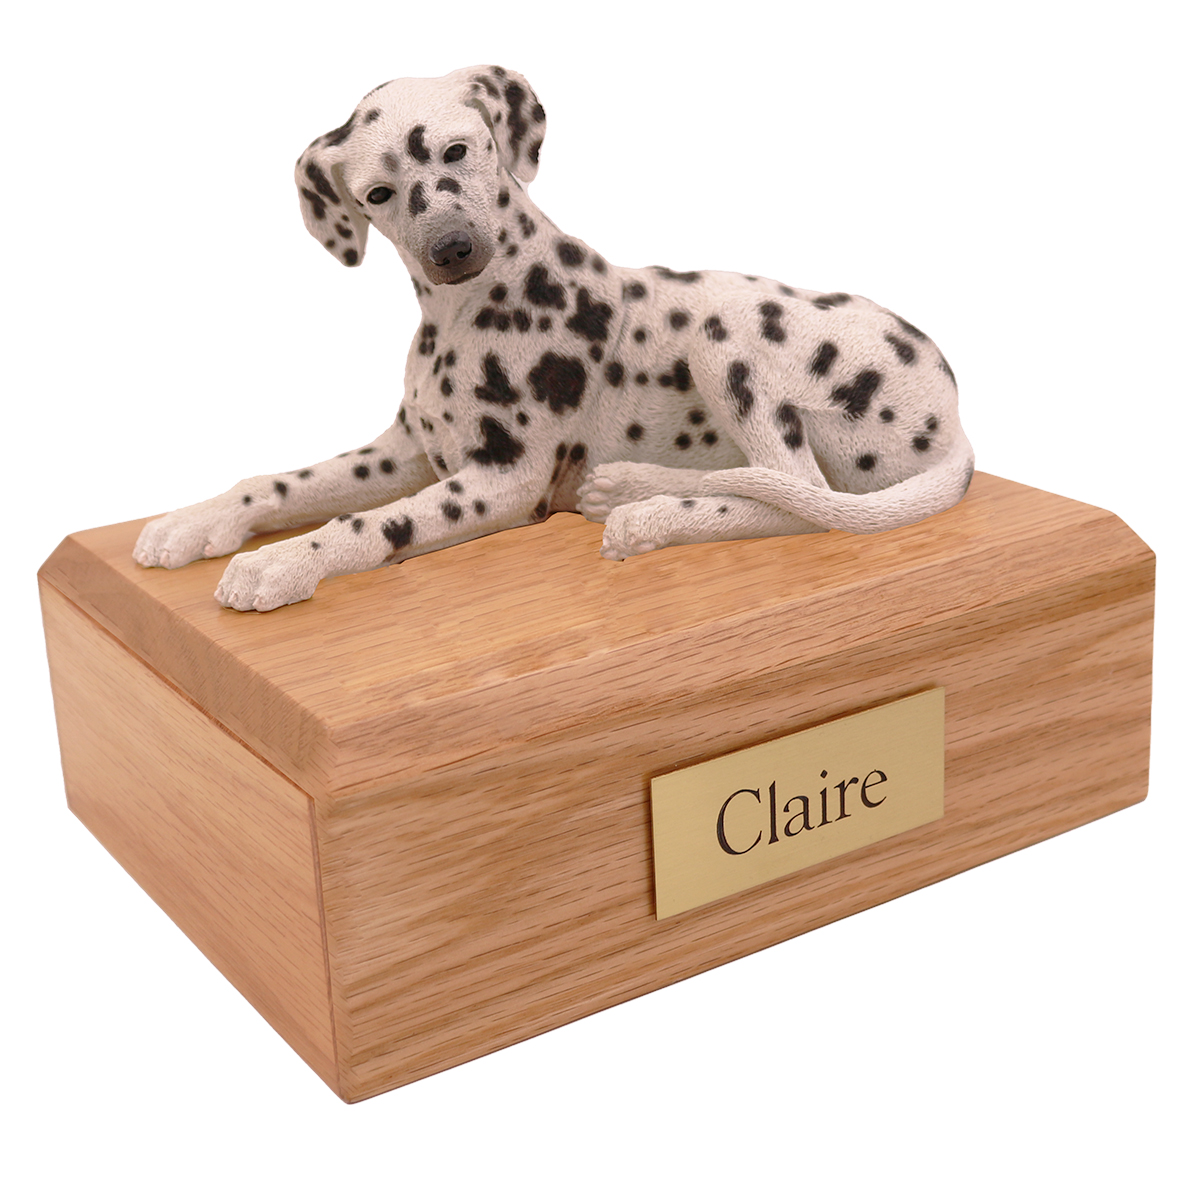 Dog, Dalmatian - Figurine Urn